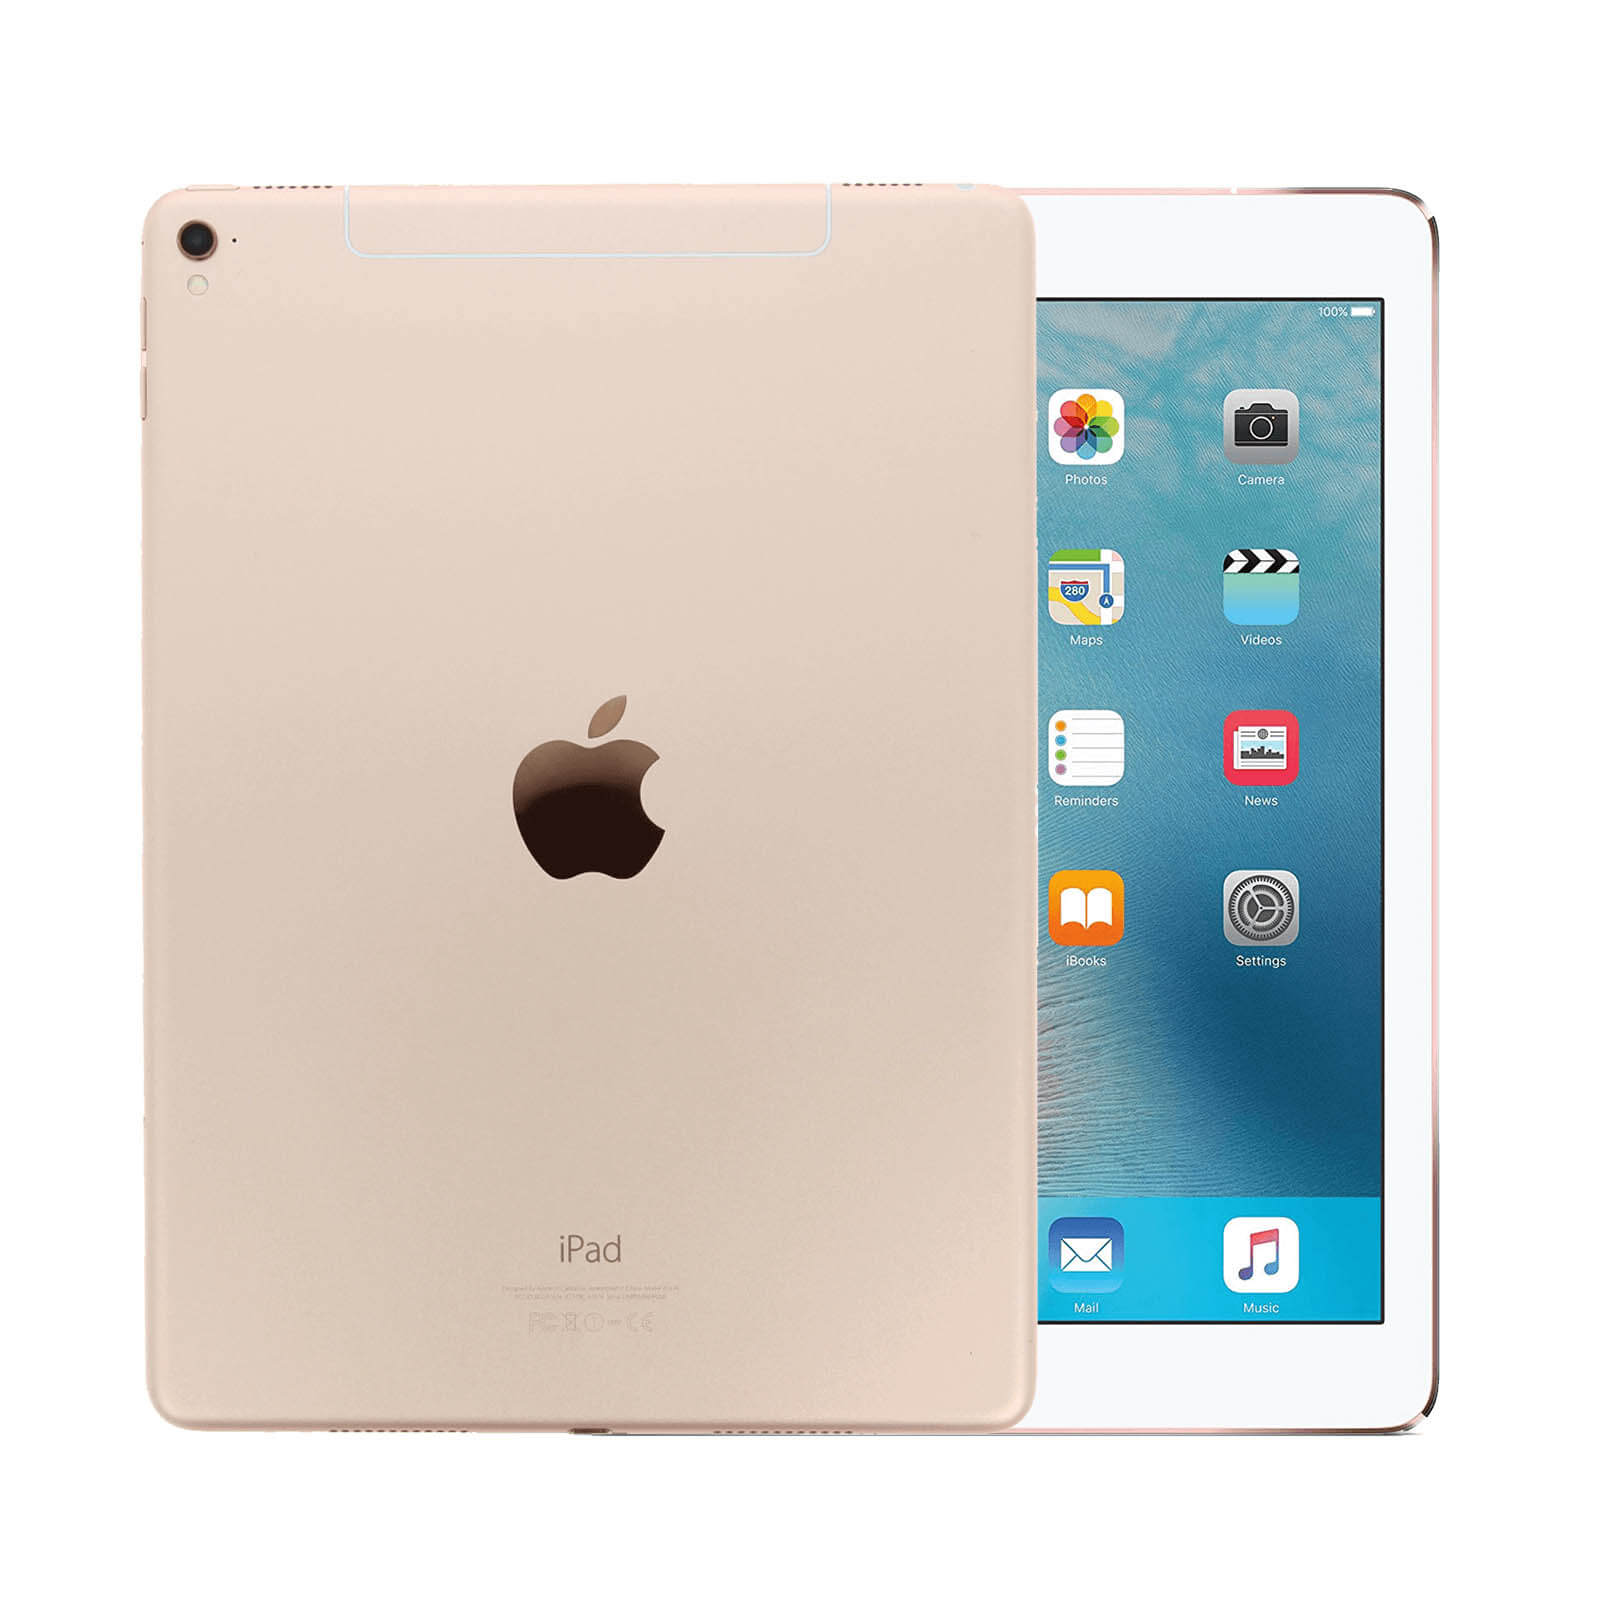 Apple iPad 128GB Ohne Vertrag - Gold - Makellos